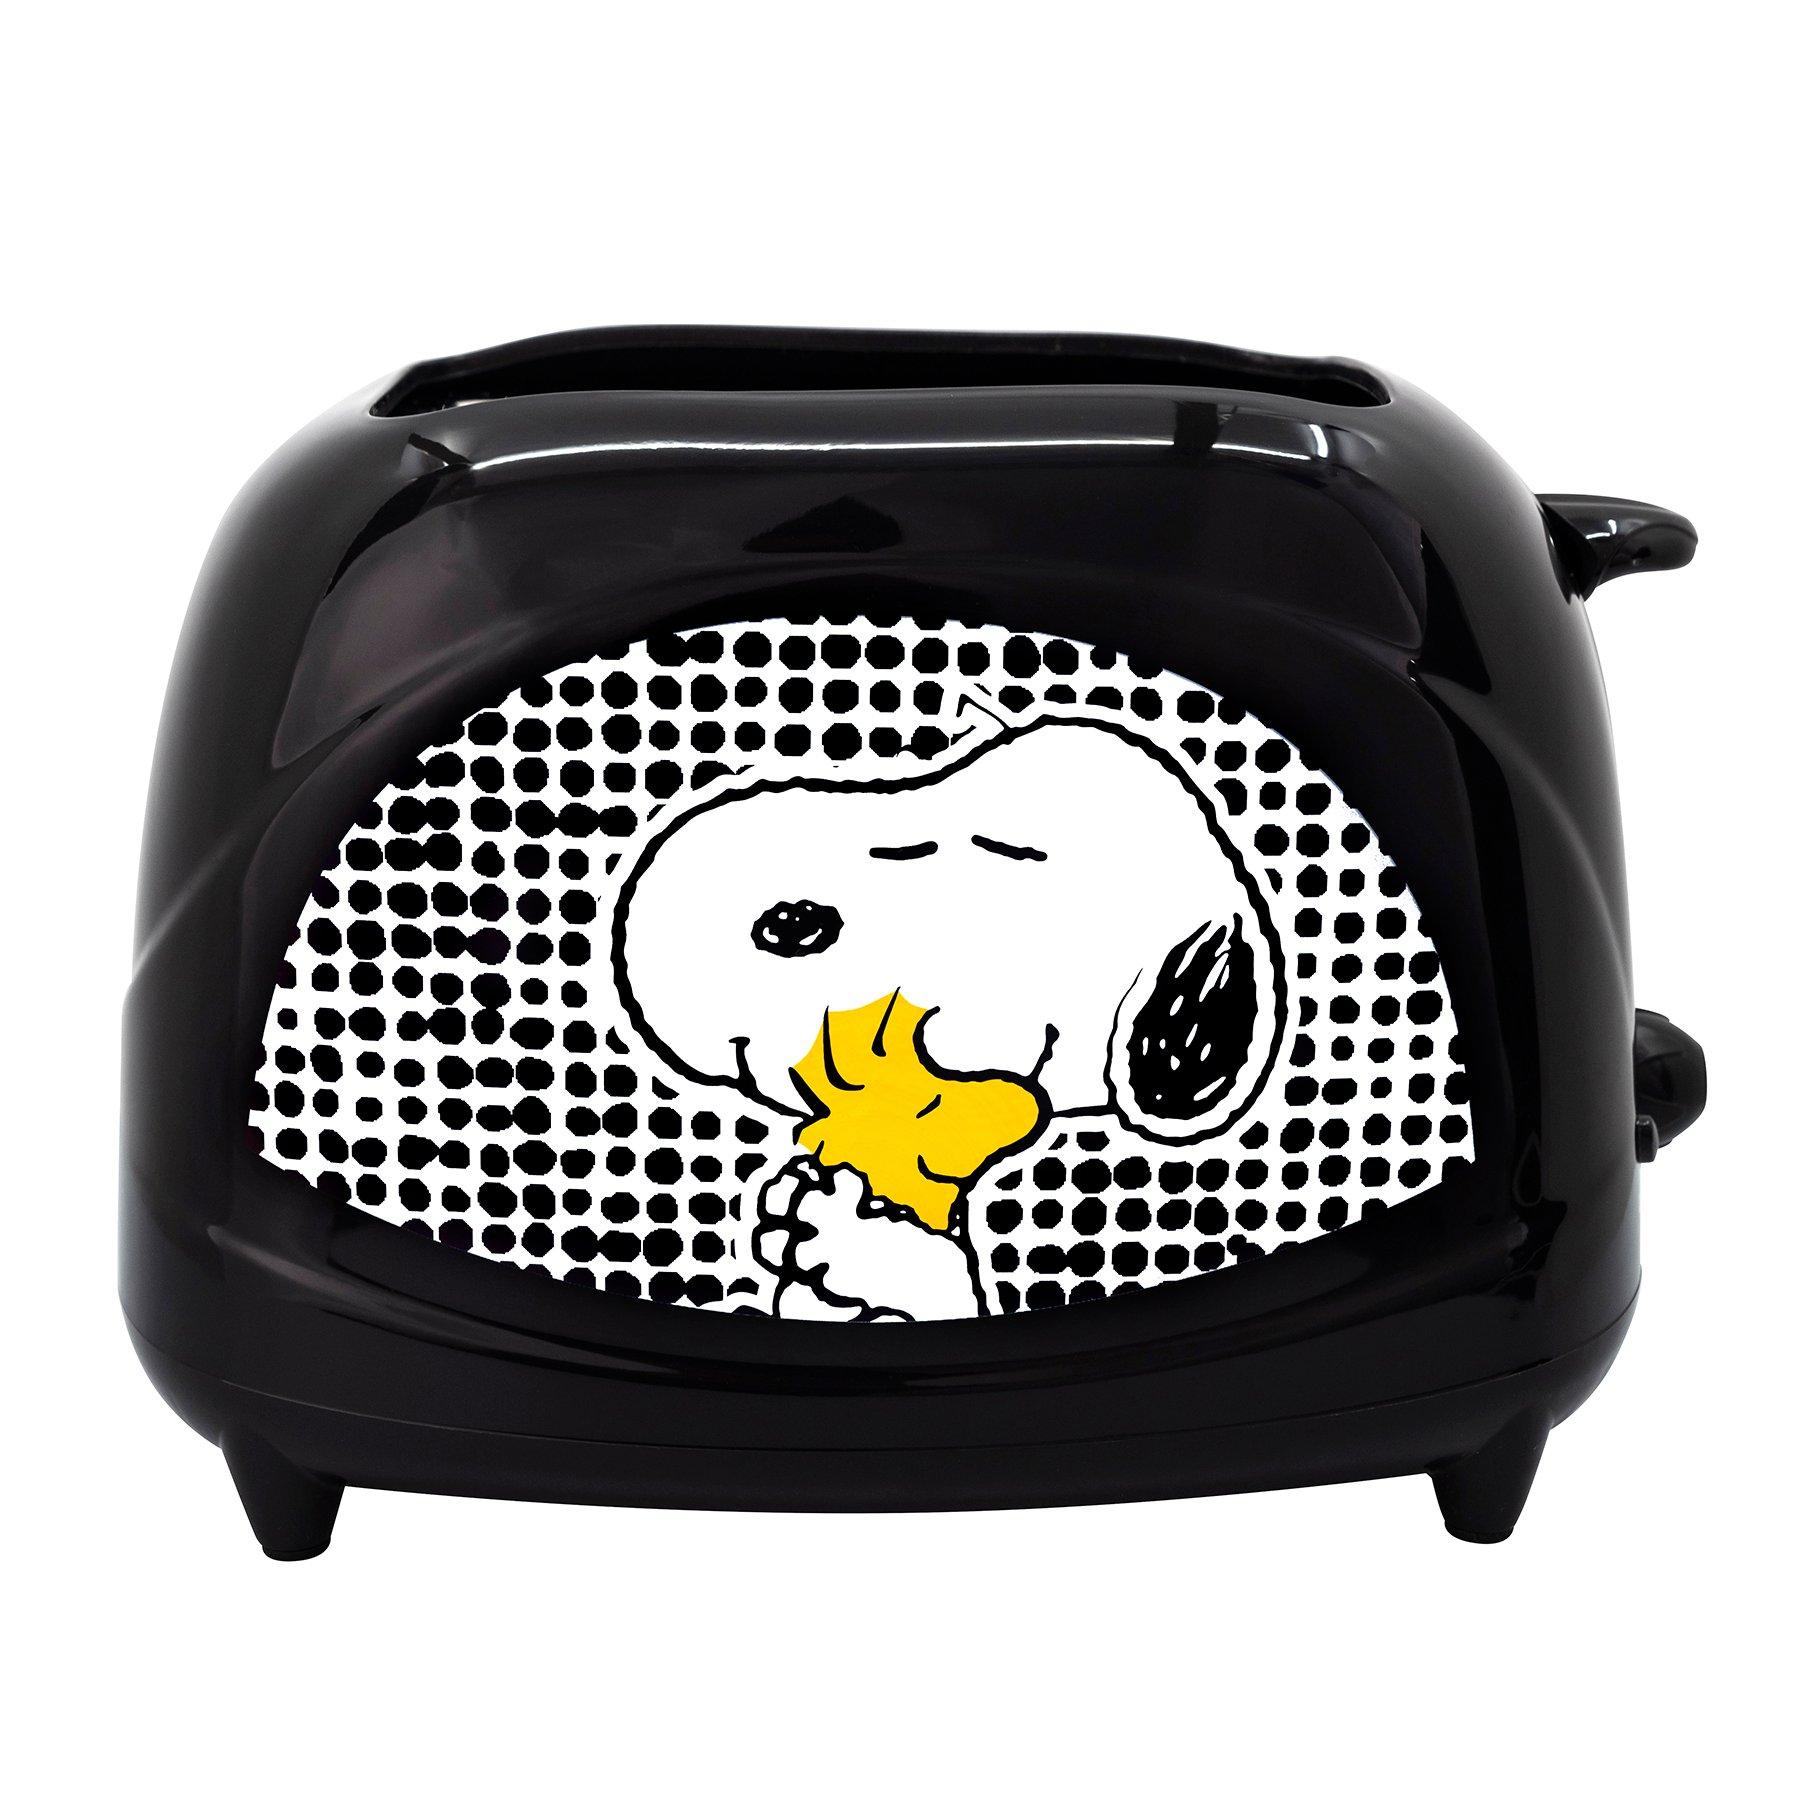 https://media.gamestop.com/i/gamestop/20005619/Peanuts-Snoopy-Elite-2-Slice-Toaster?$pdp$